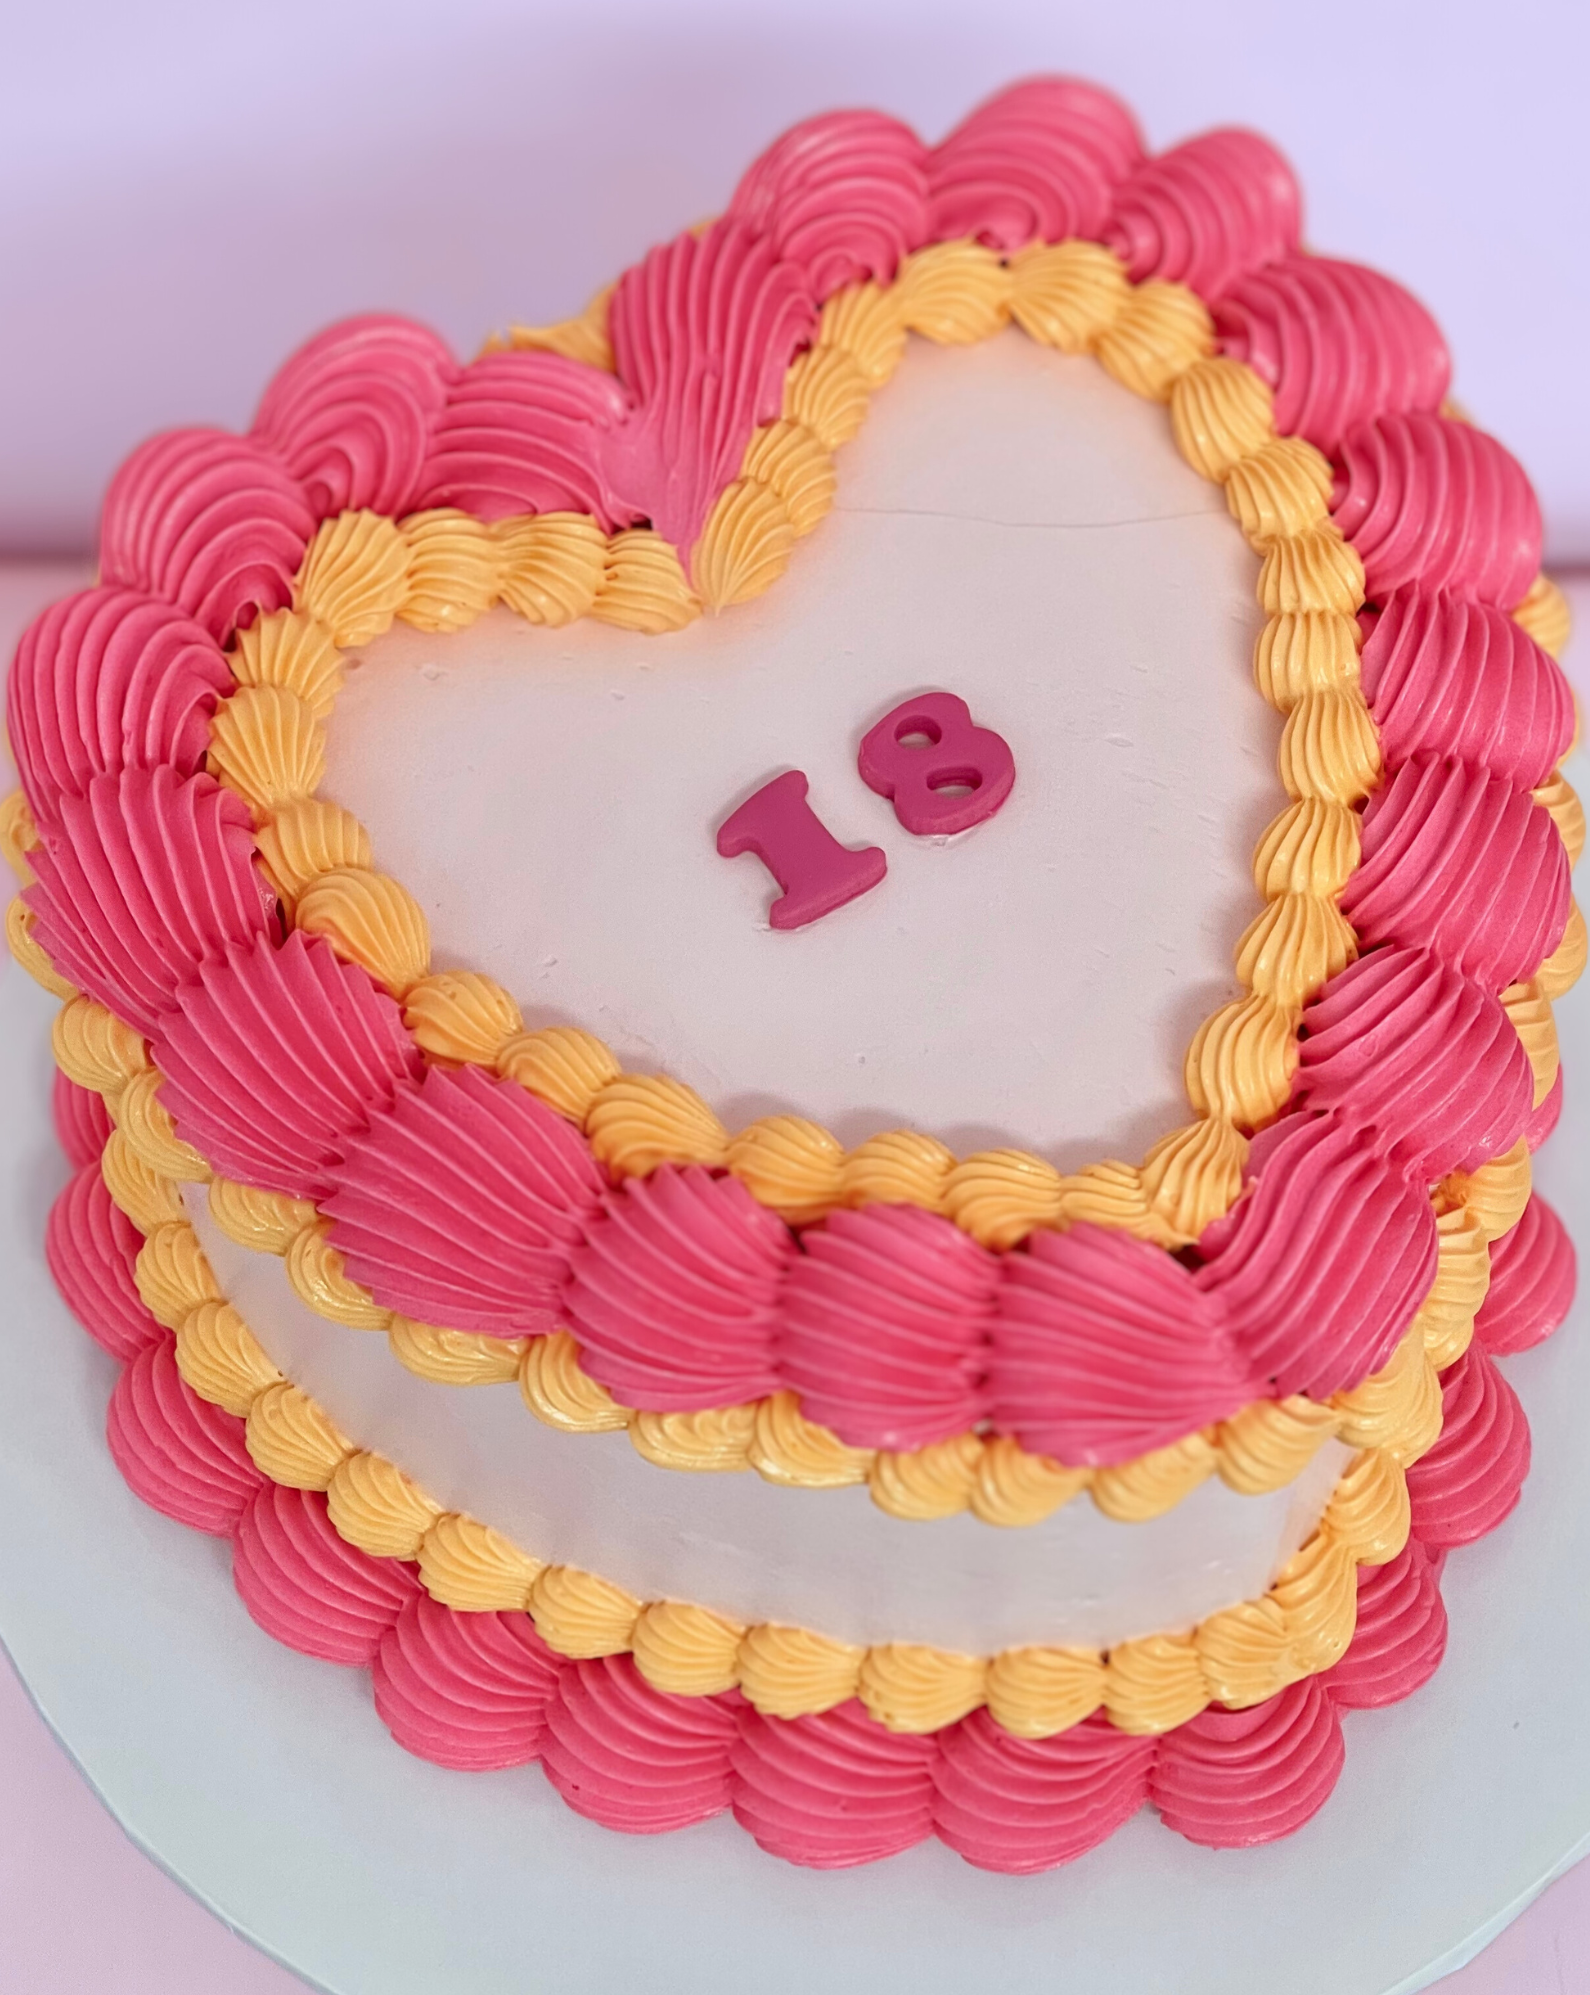 Cute Heart Shaped Speciality Cake